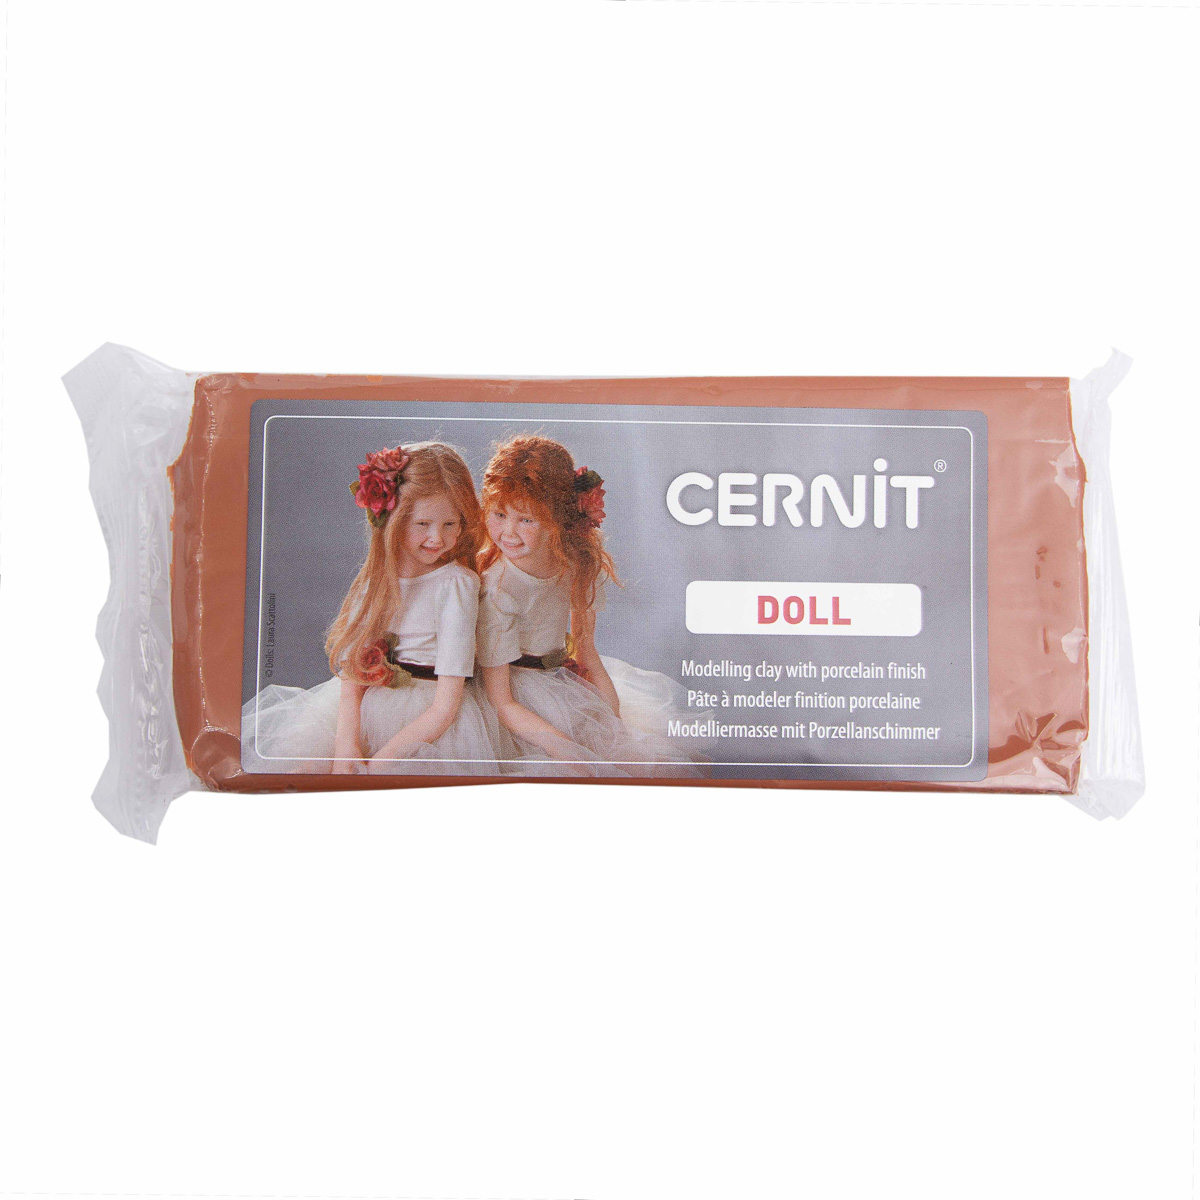 Пластика Cernit Doll, 500 грамм, цвет: 807 карамельный, арт. CE0960500 Cernit